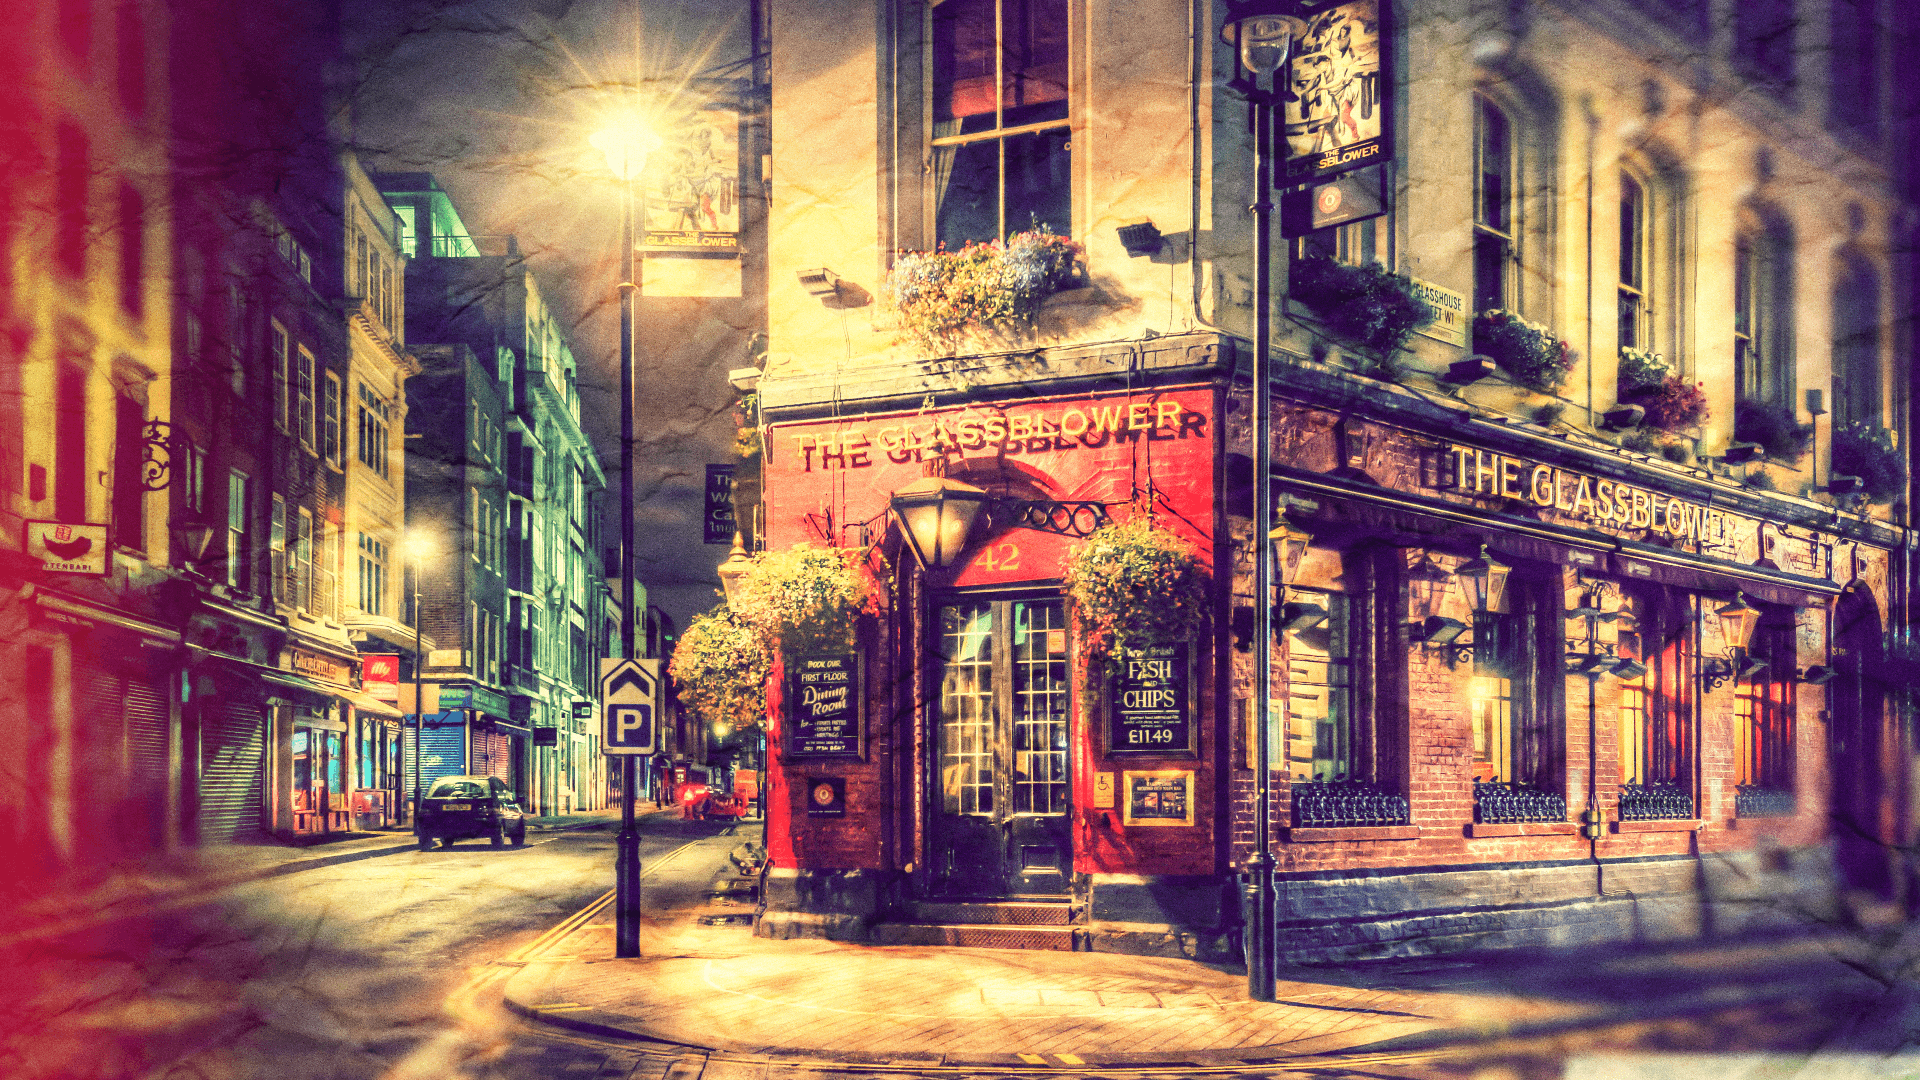 Brewer Pub London Vintage